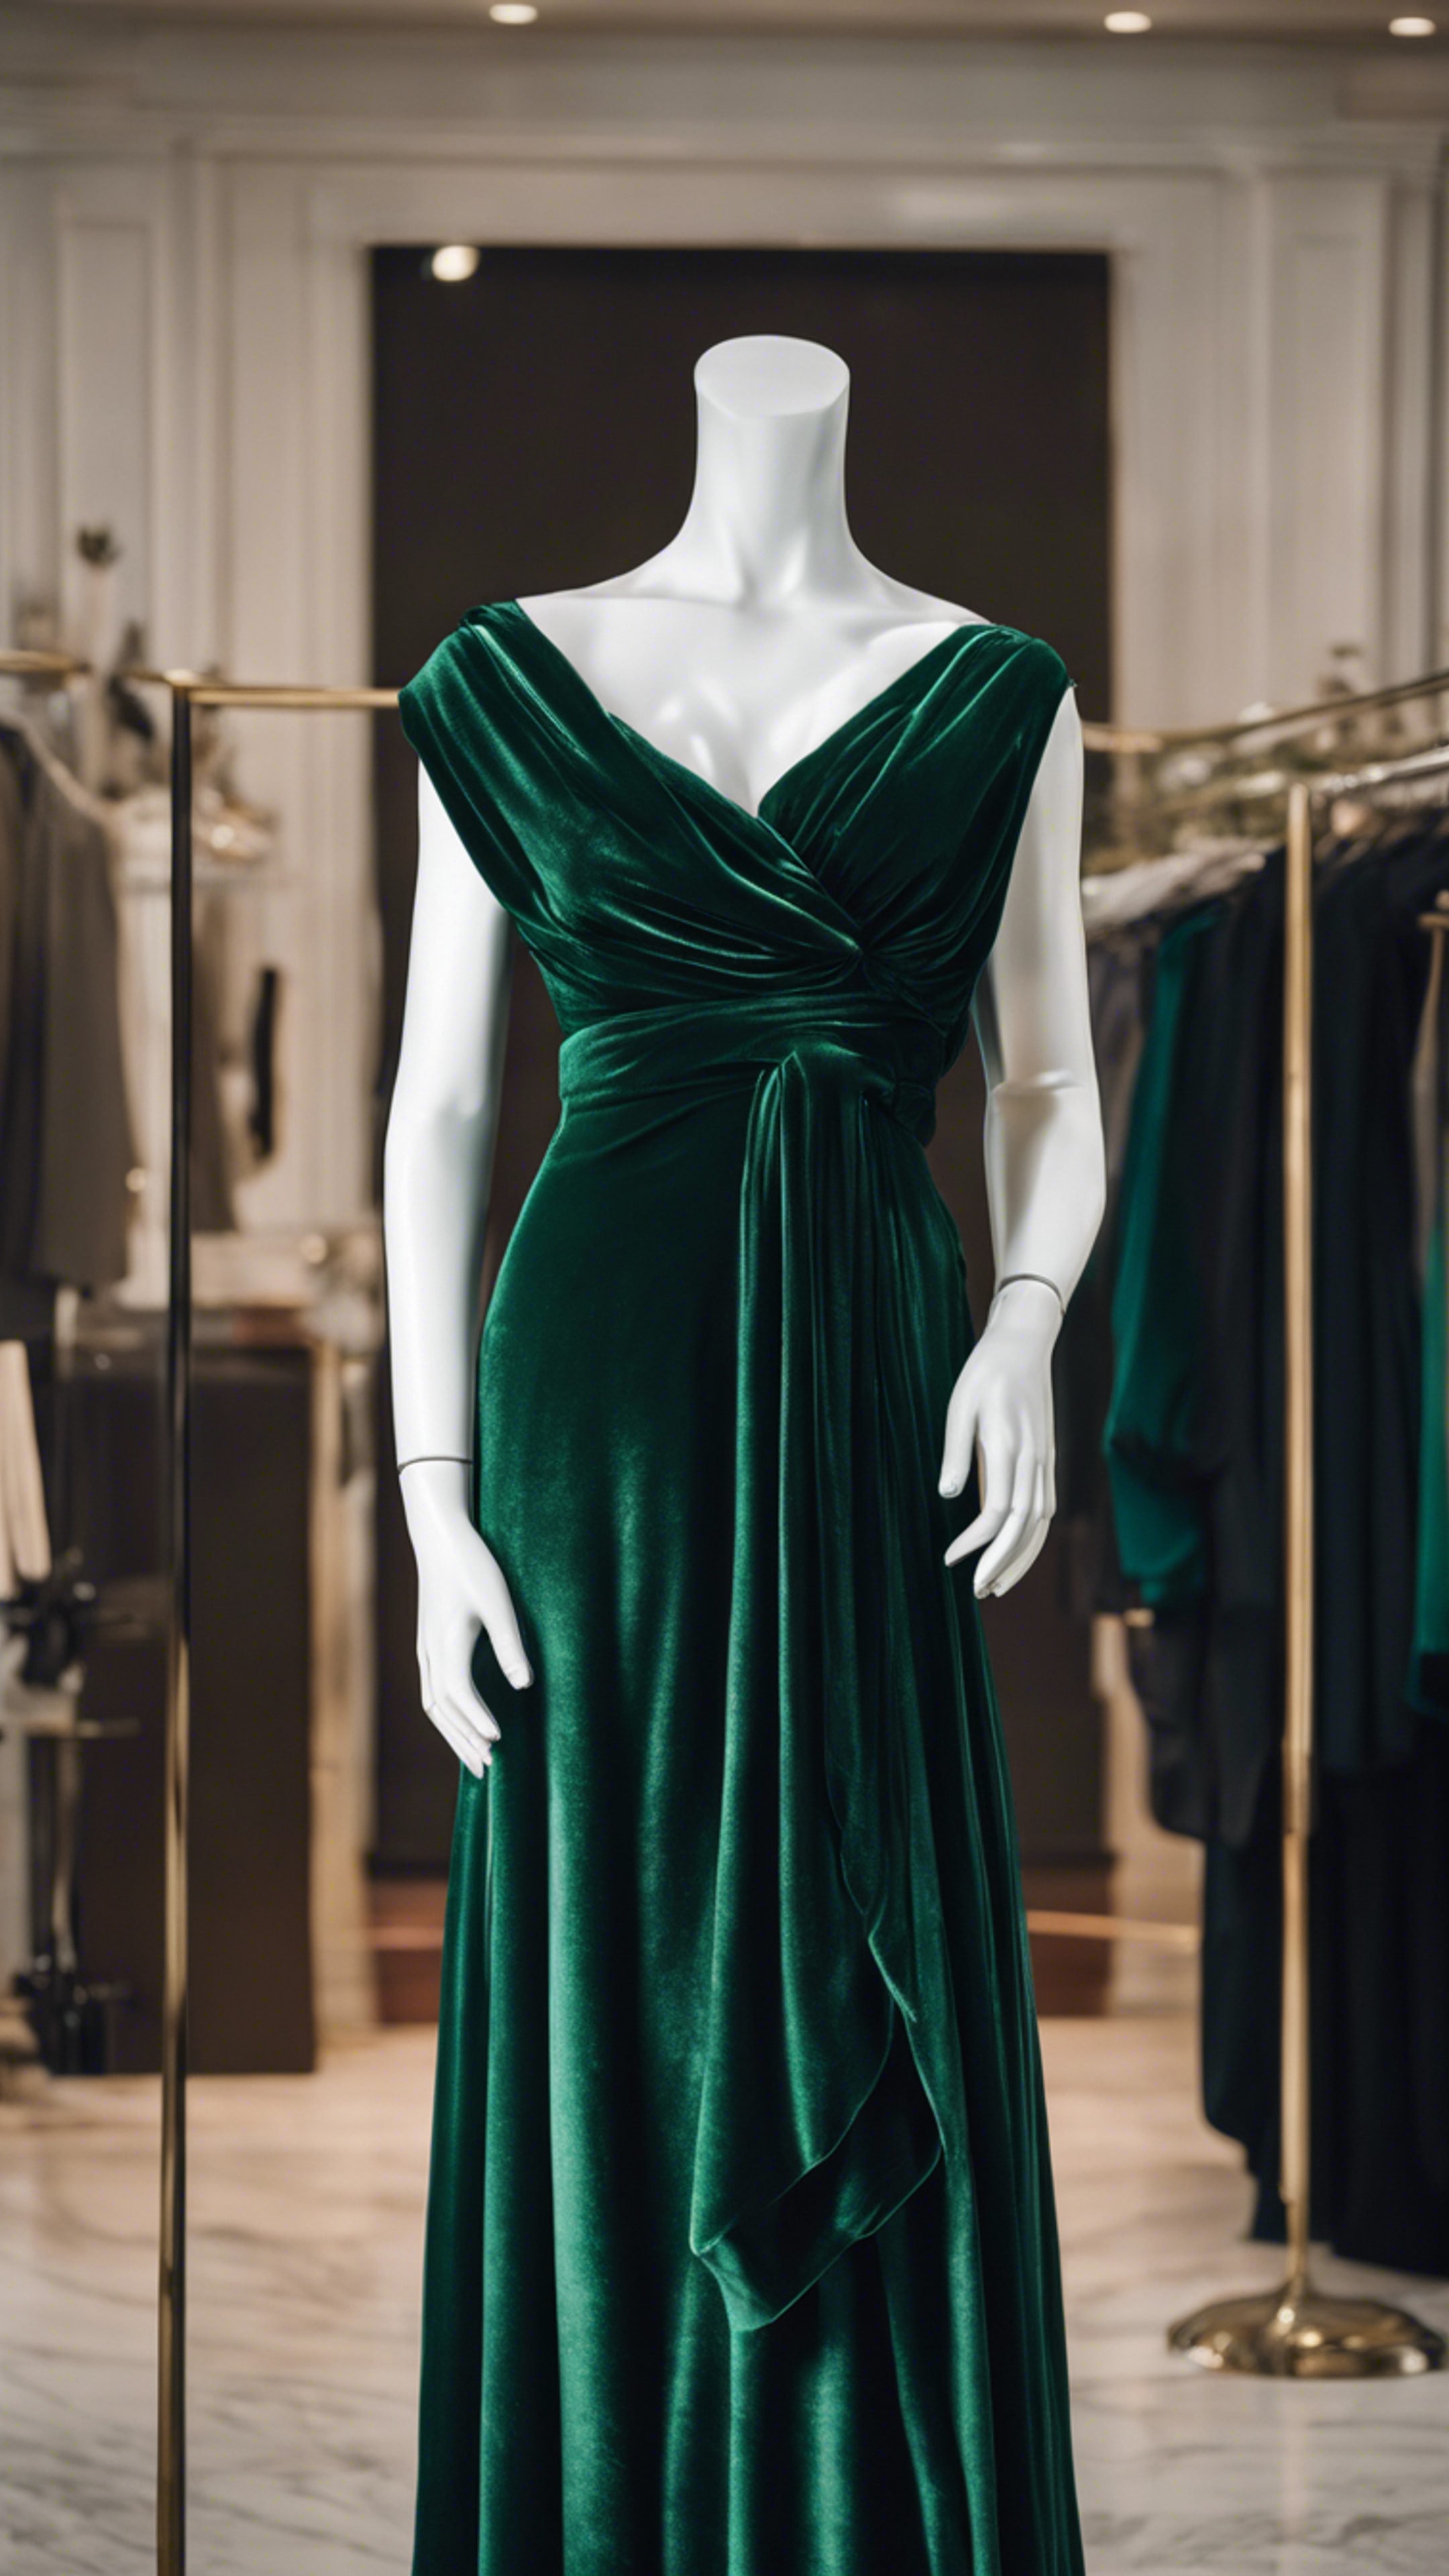 A classy dark green velvet dress draped on a mannequin. Hintergrund[4958bfaa75d040bb9909]